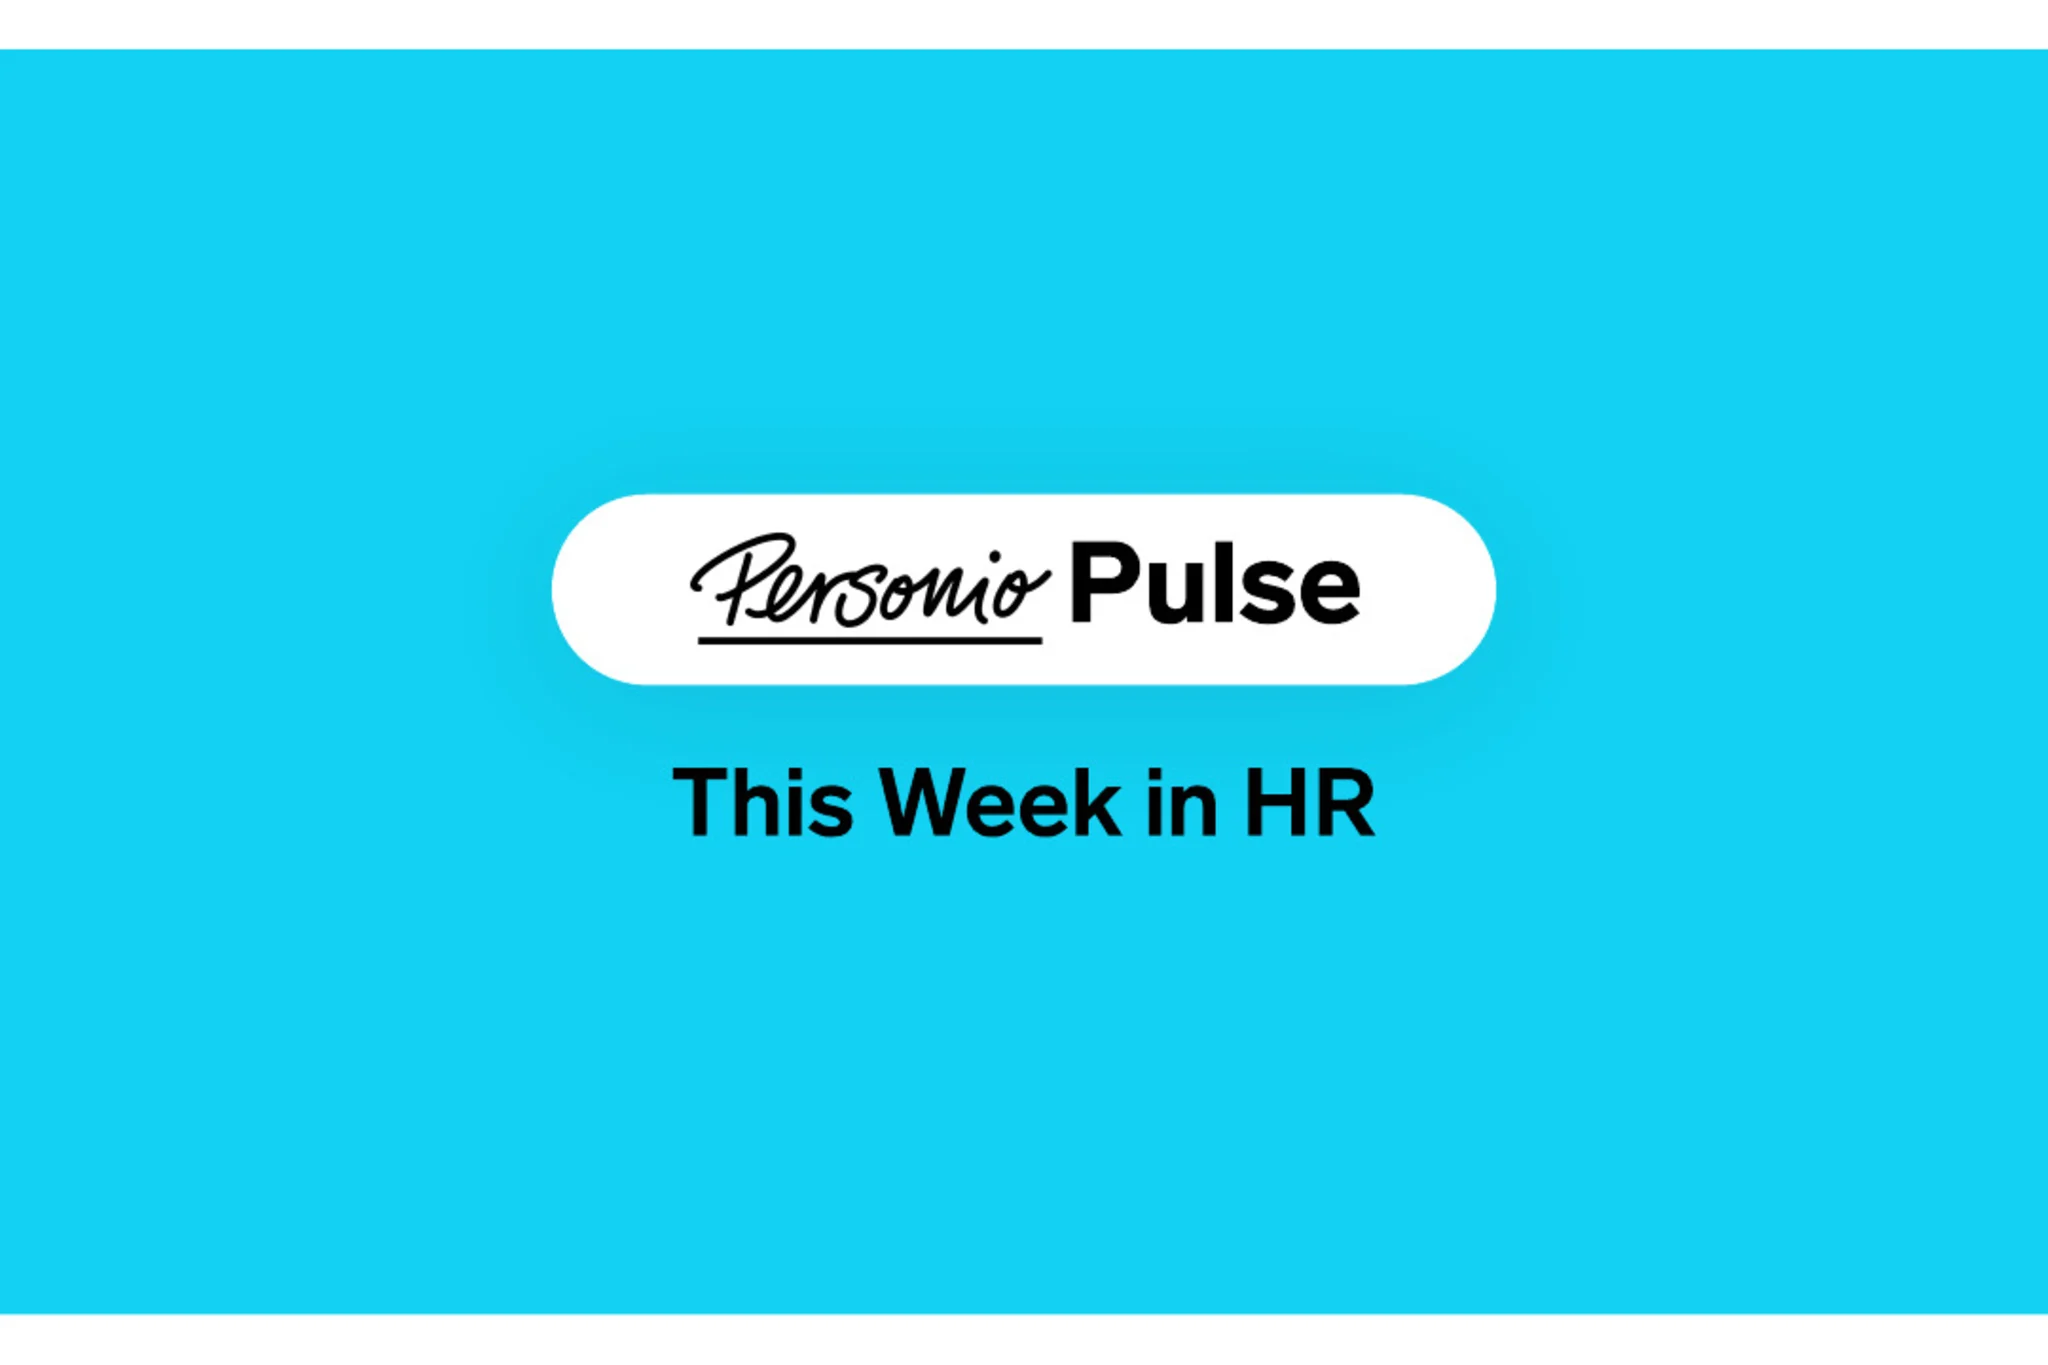 Personio Pulse: This Week in HR - 1